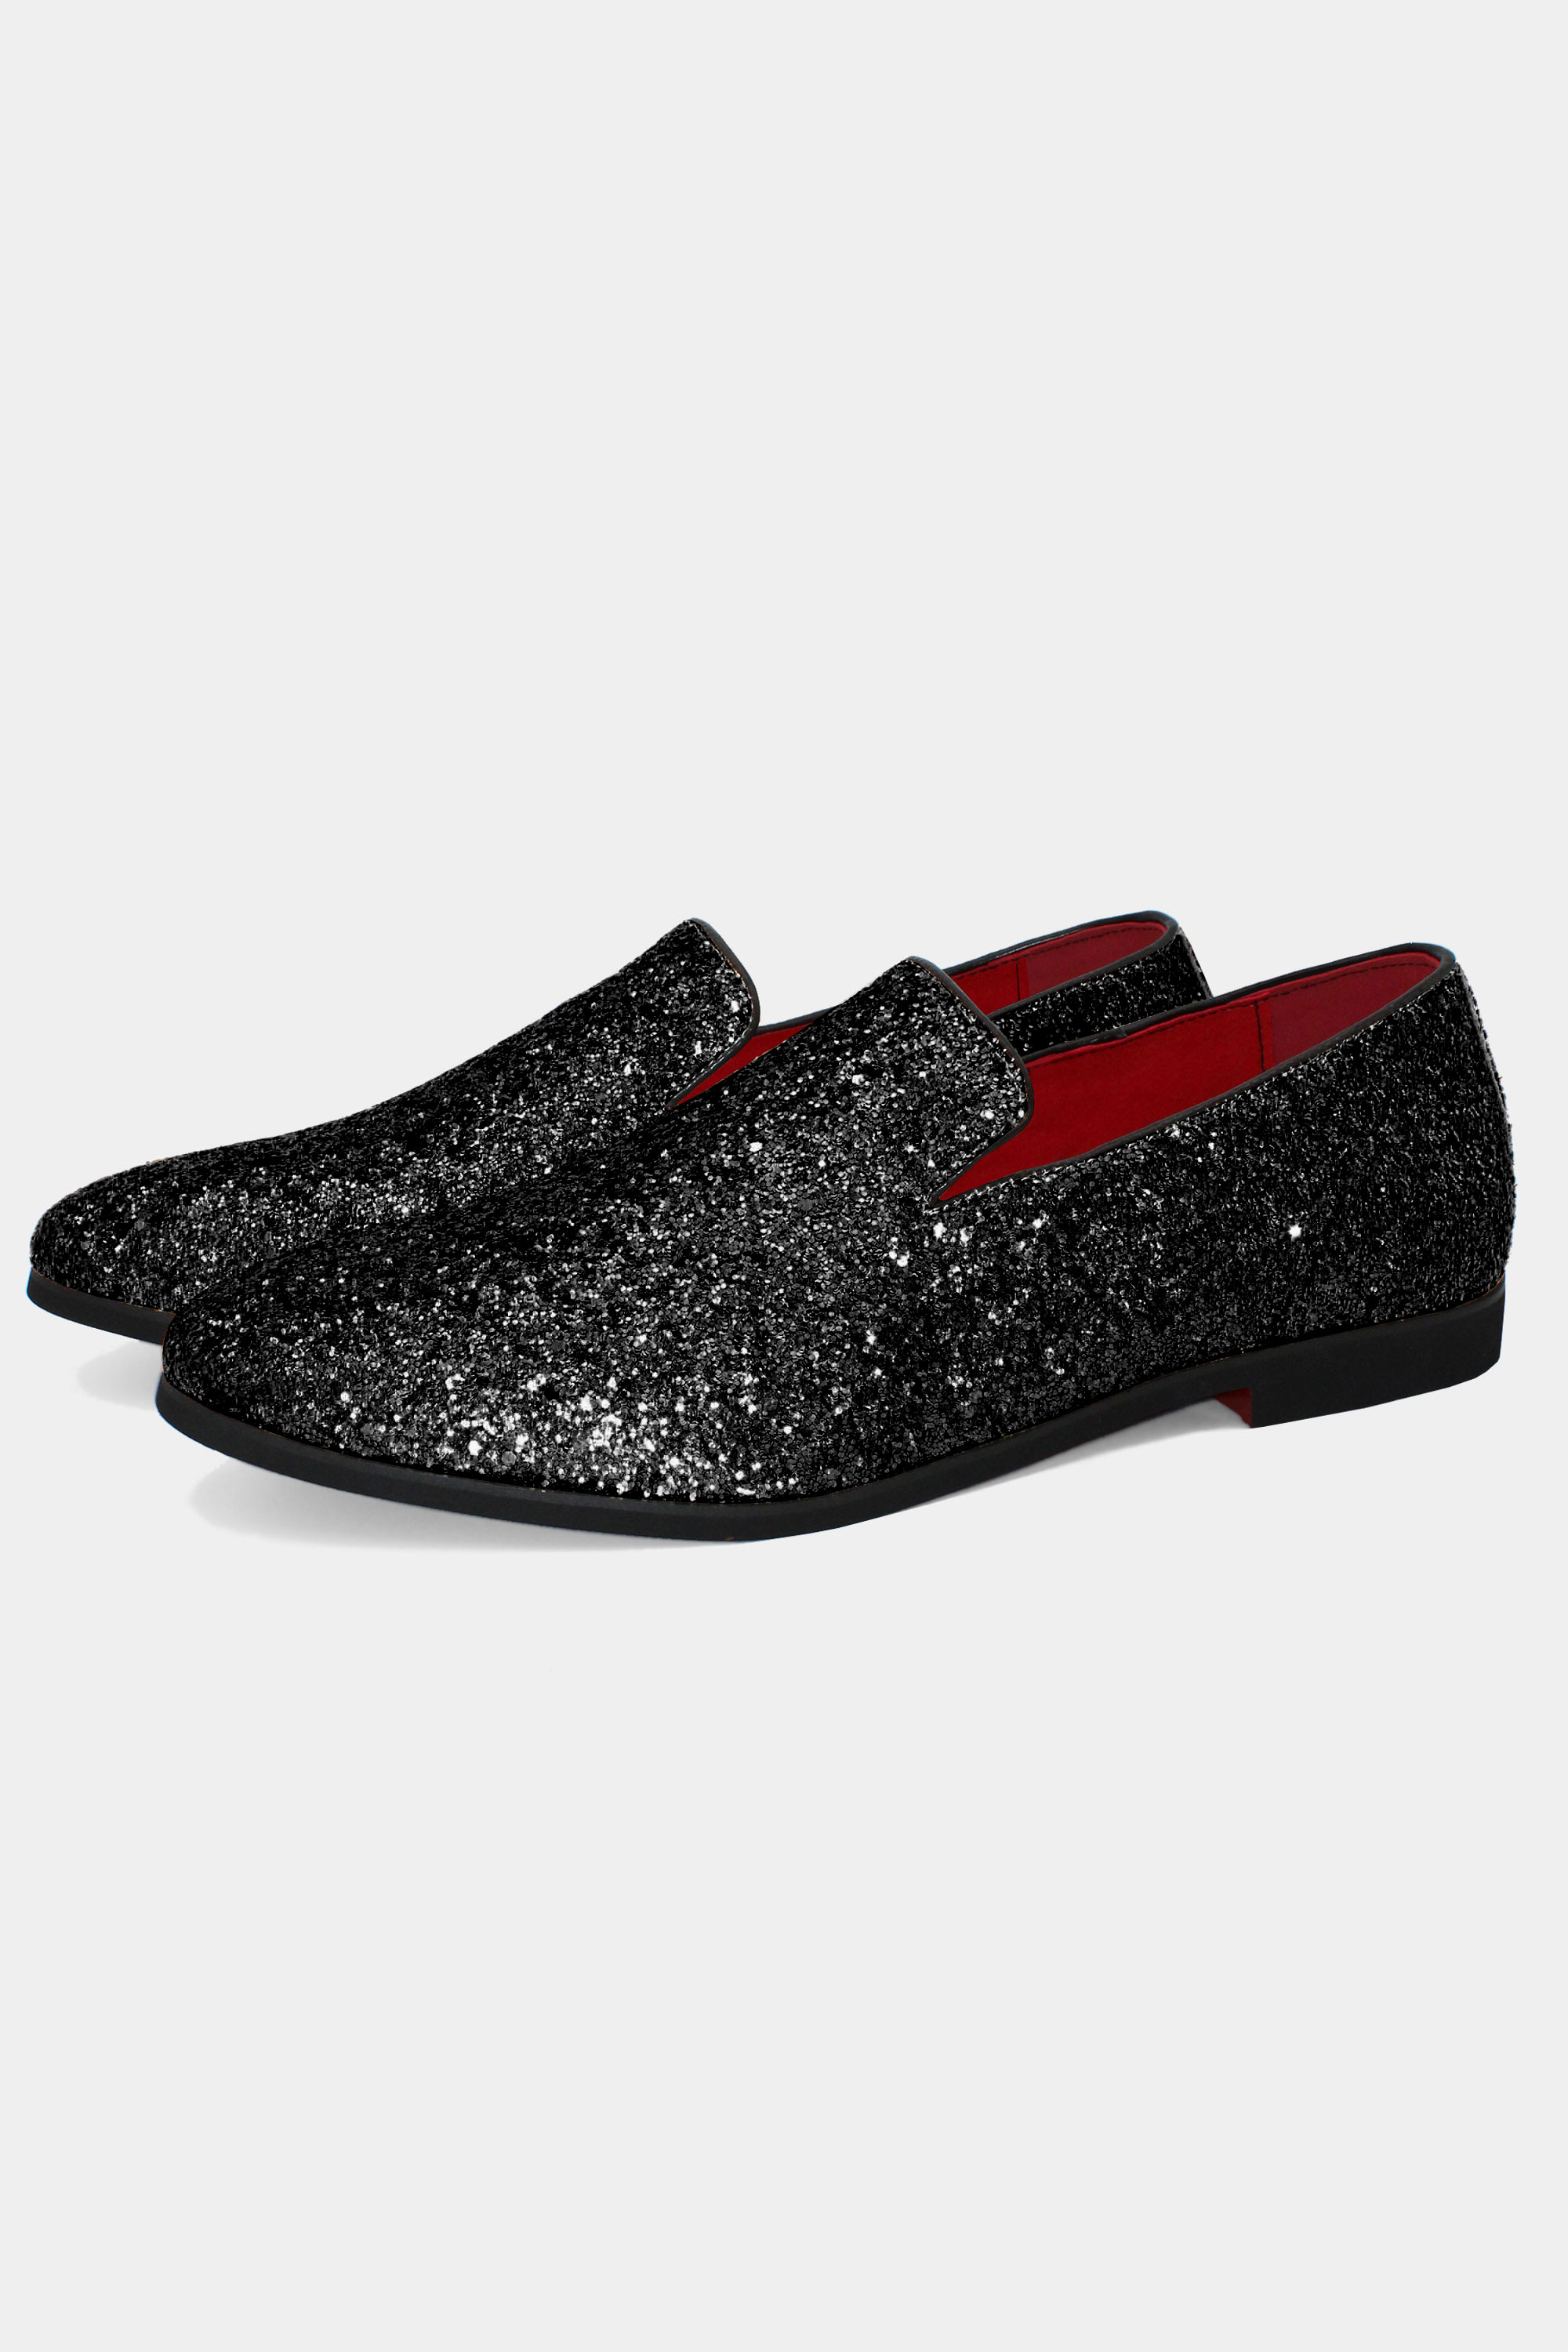 Pointer reagere Postimpressionisme Men's Black Glitter Shoes Loafers | Gentleman's Guru